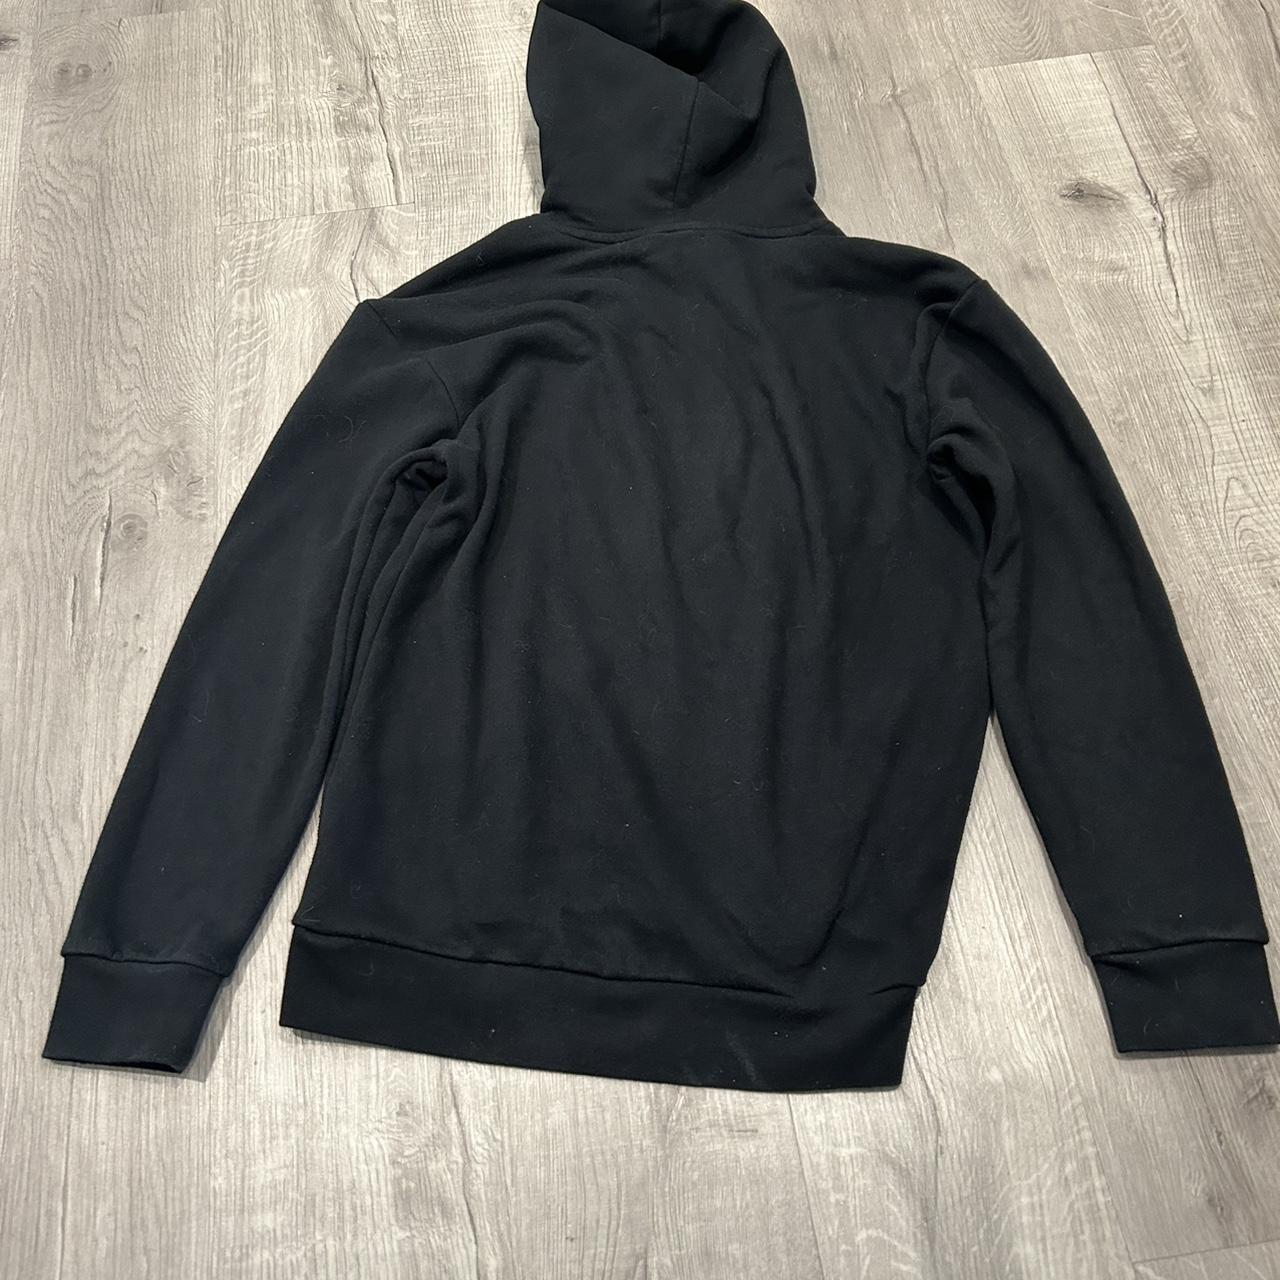 plain black hoodie its medium but can fit a large... - Depop